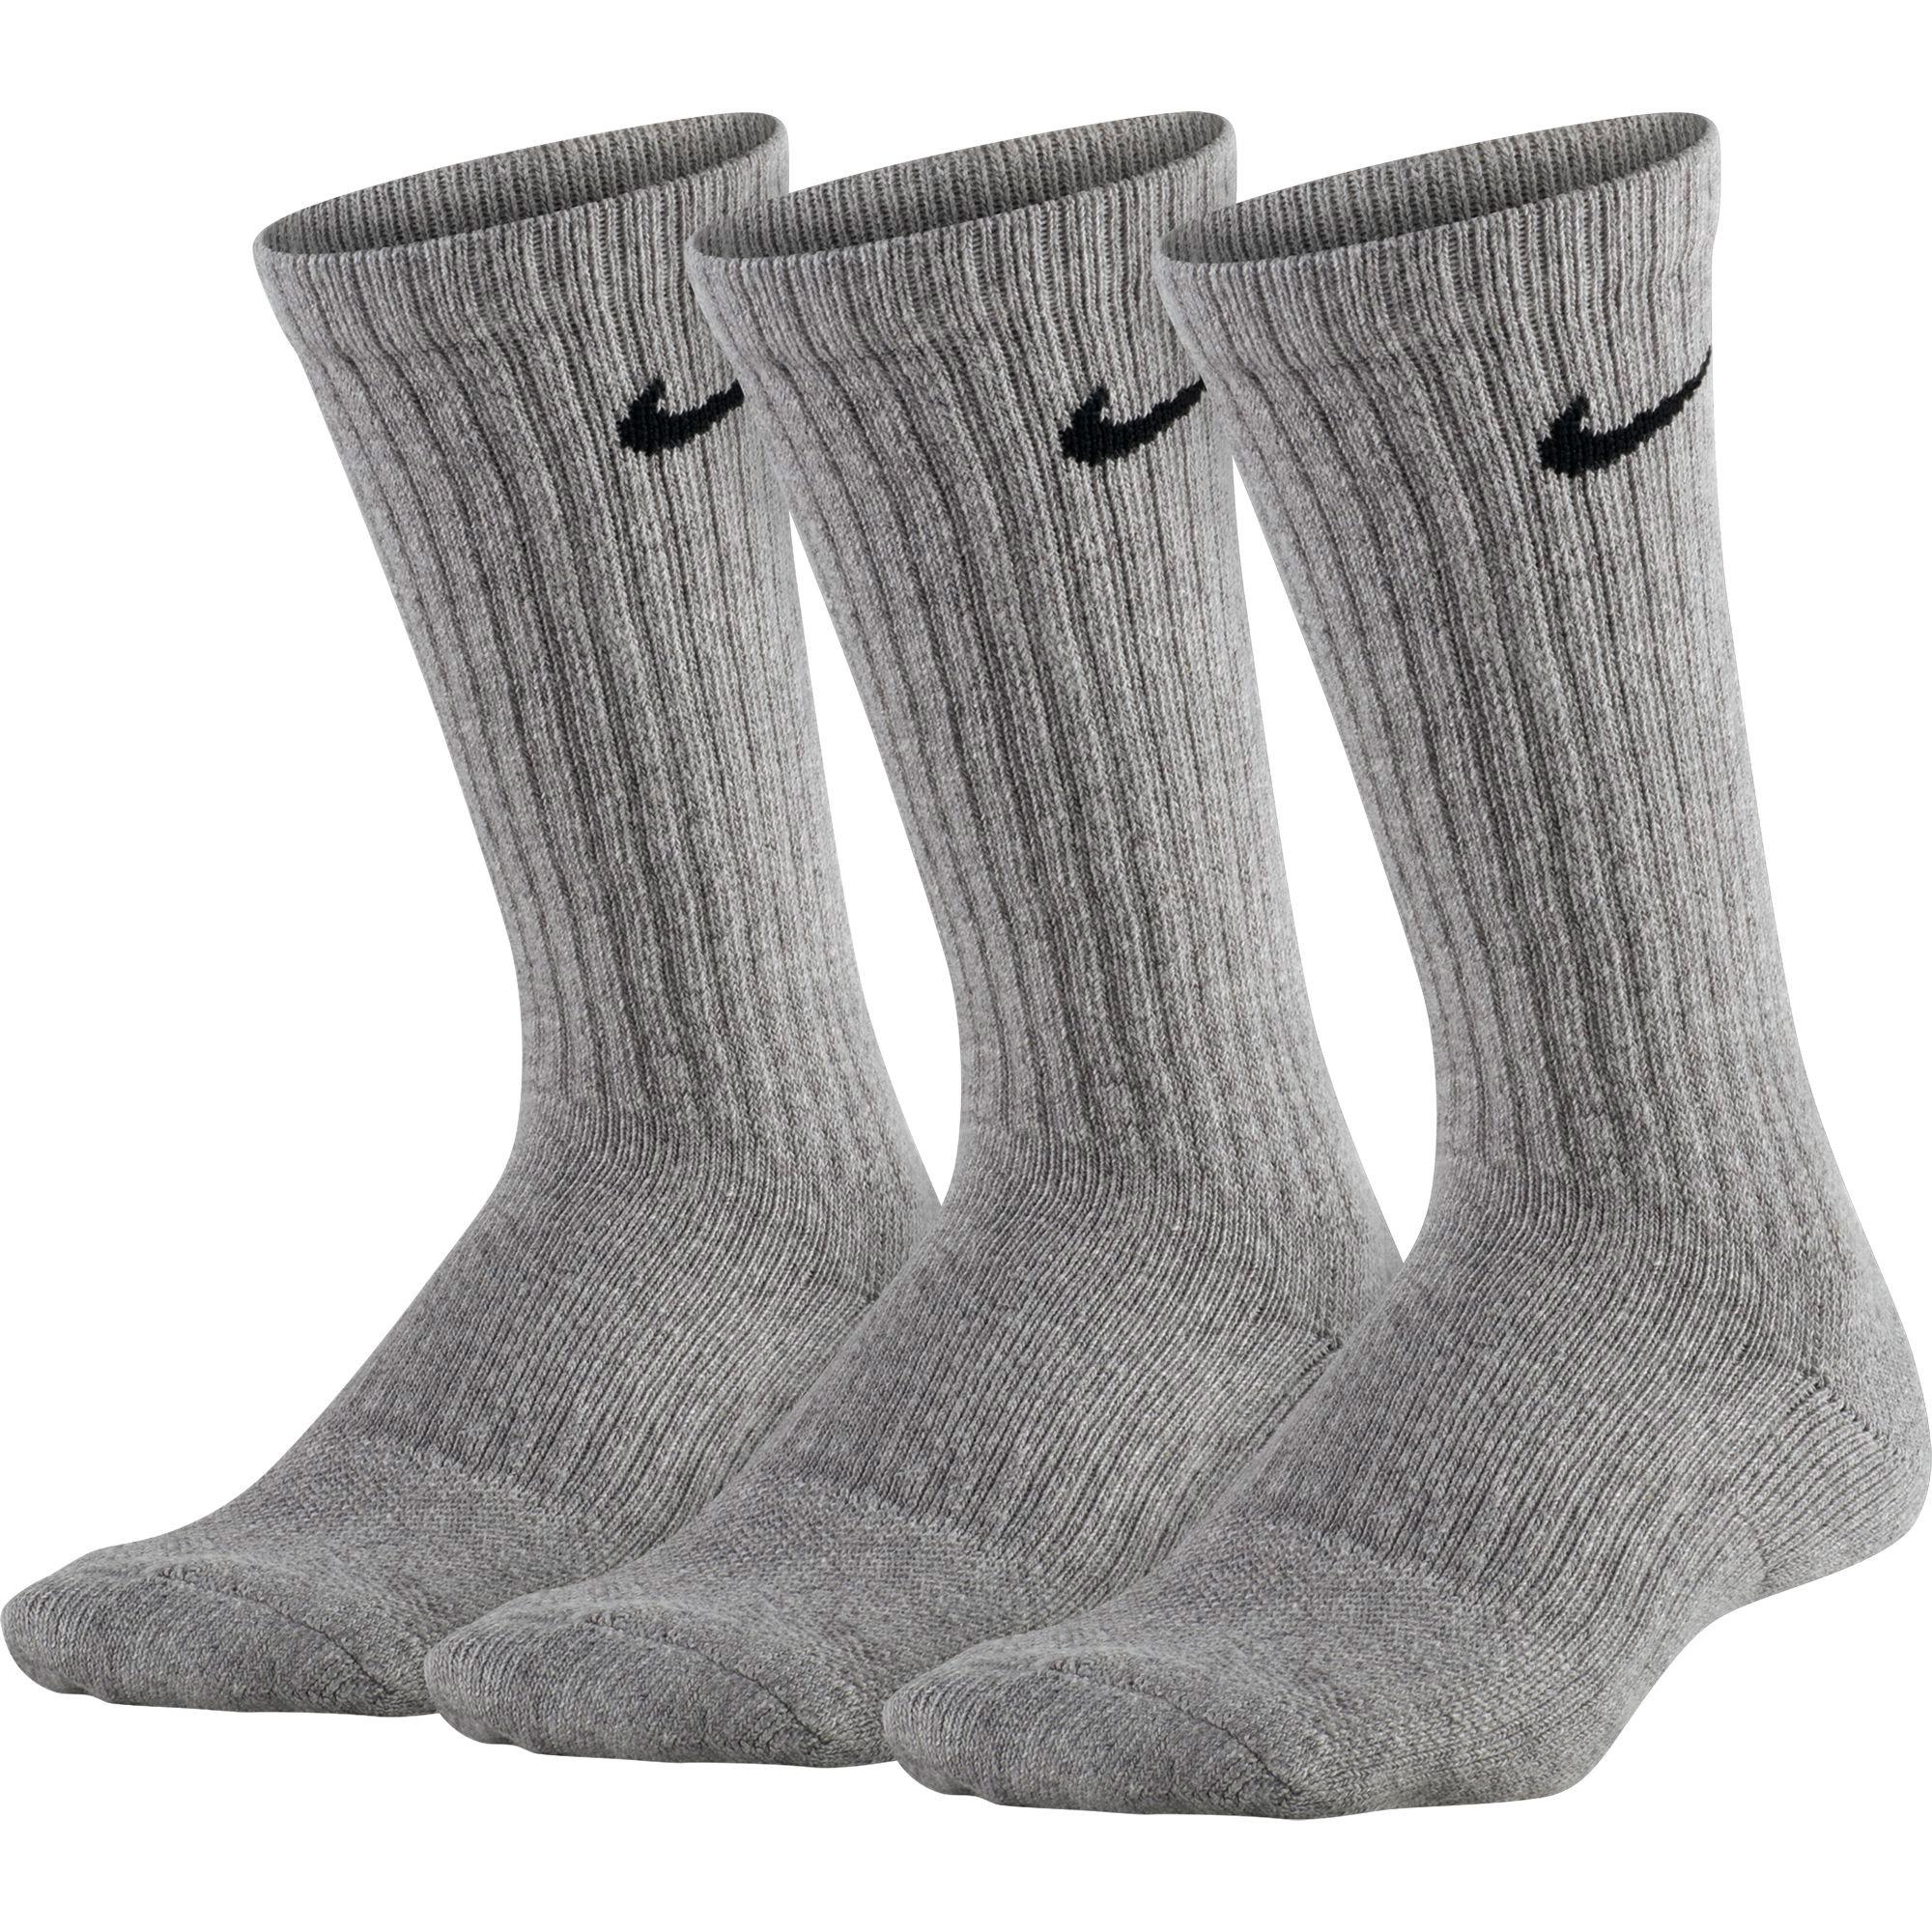 black nike socks with grey swoosh